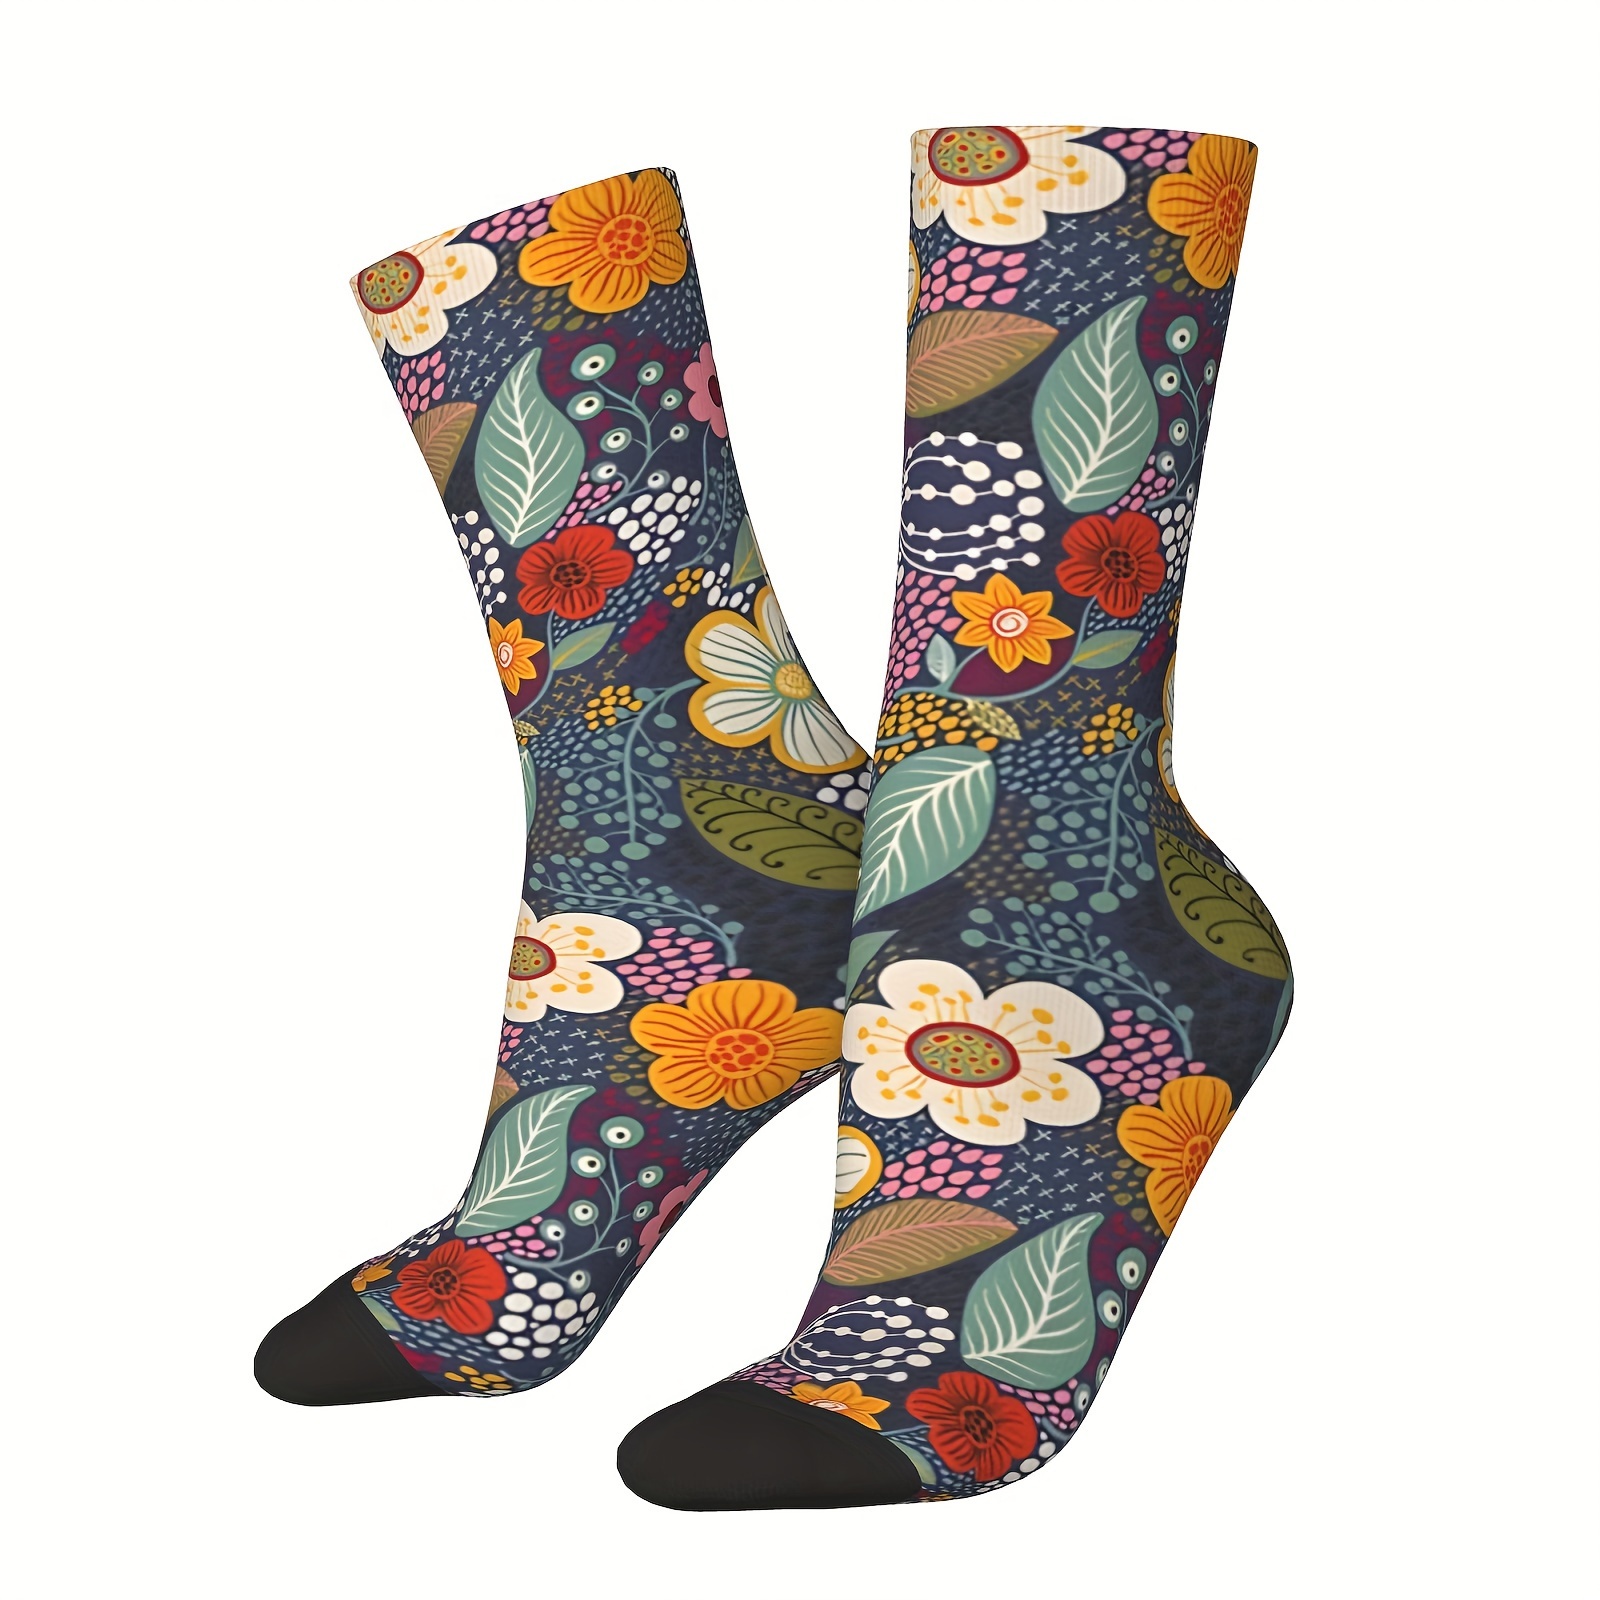 

1 Pair Of Unisex Harajuku & Vintage Style Novelty Pattern Crew Socks, Trendy Graffiti Men Women Socks, Crazy Funny Socks For Gifts